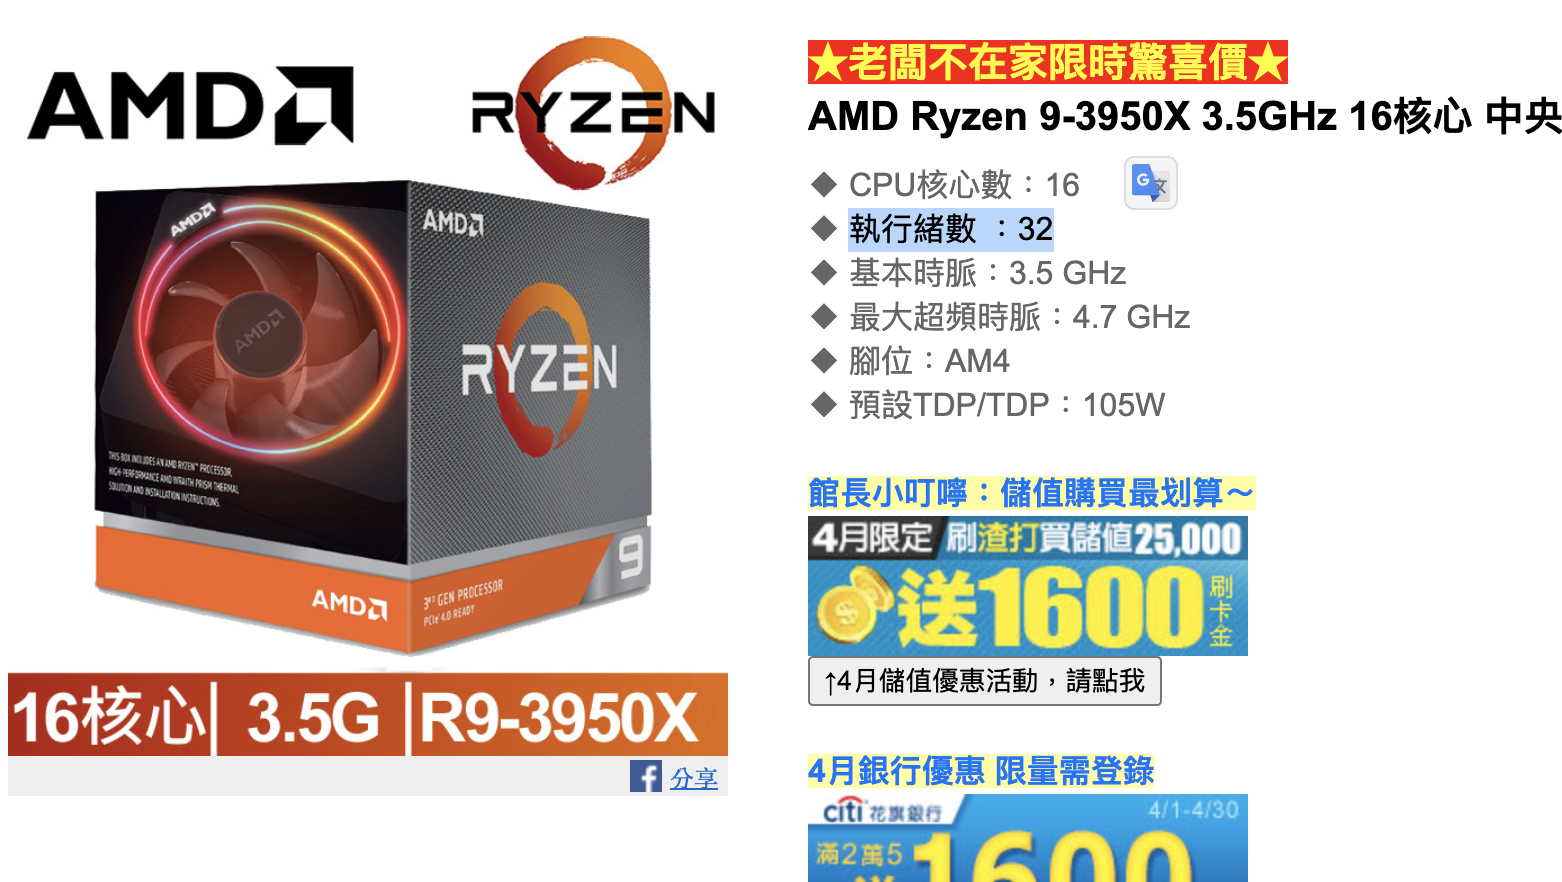 AMD Ryzen 9-3950X